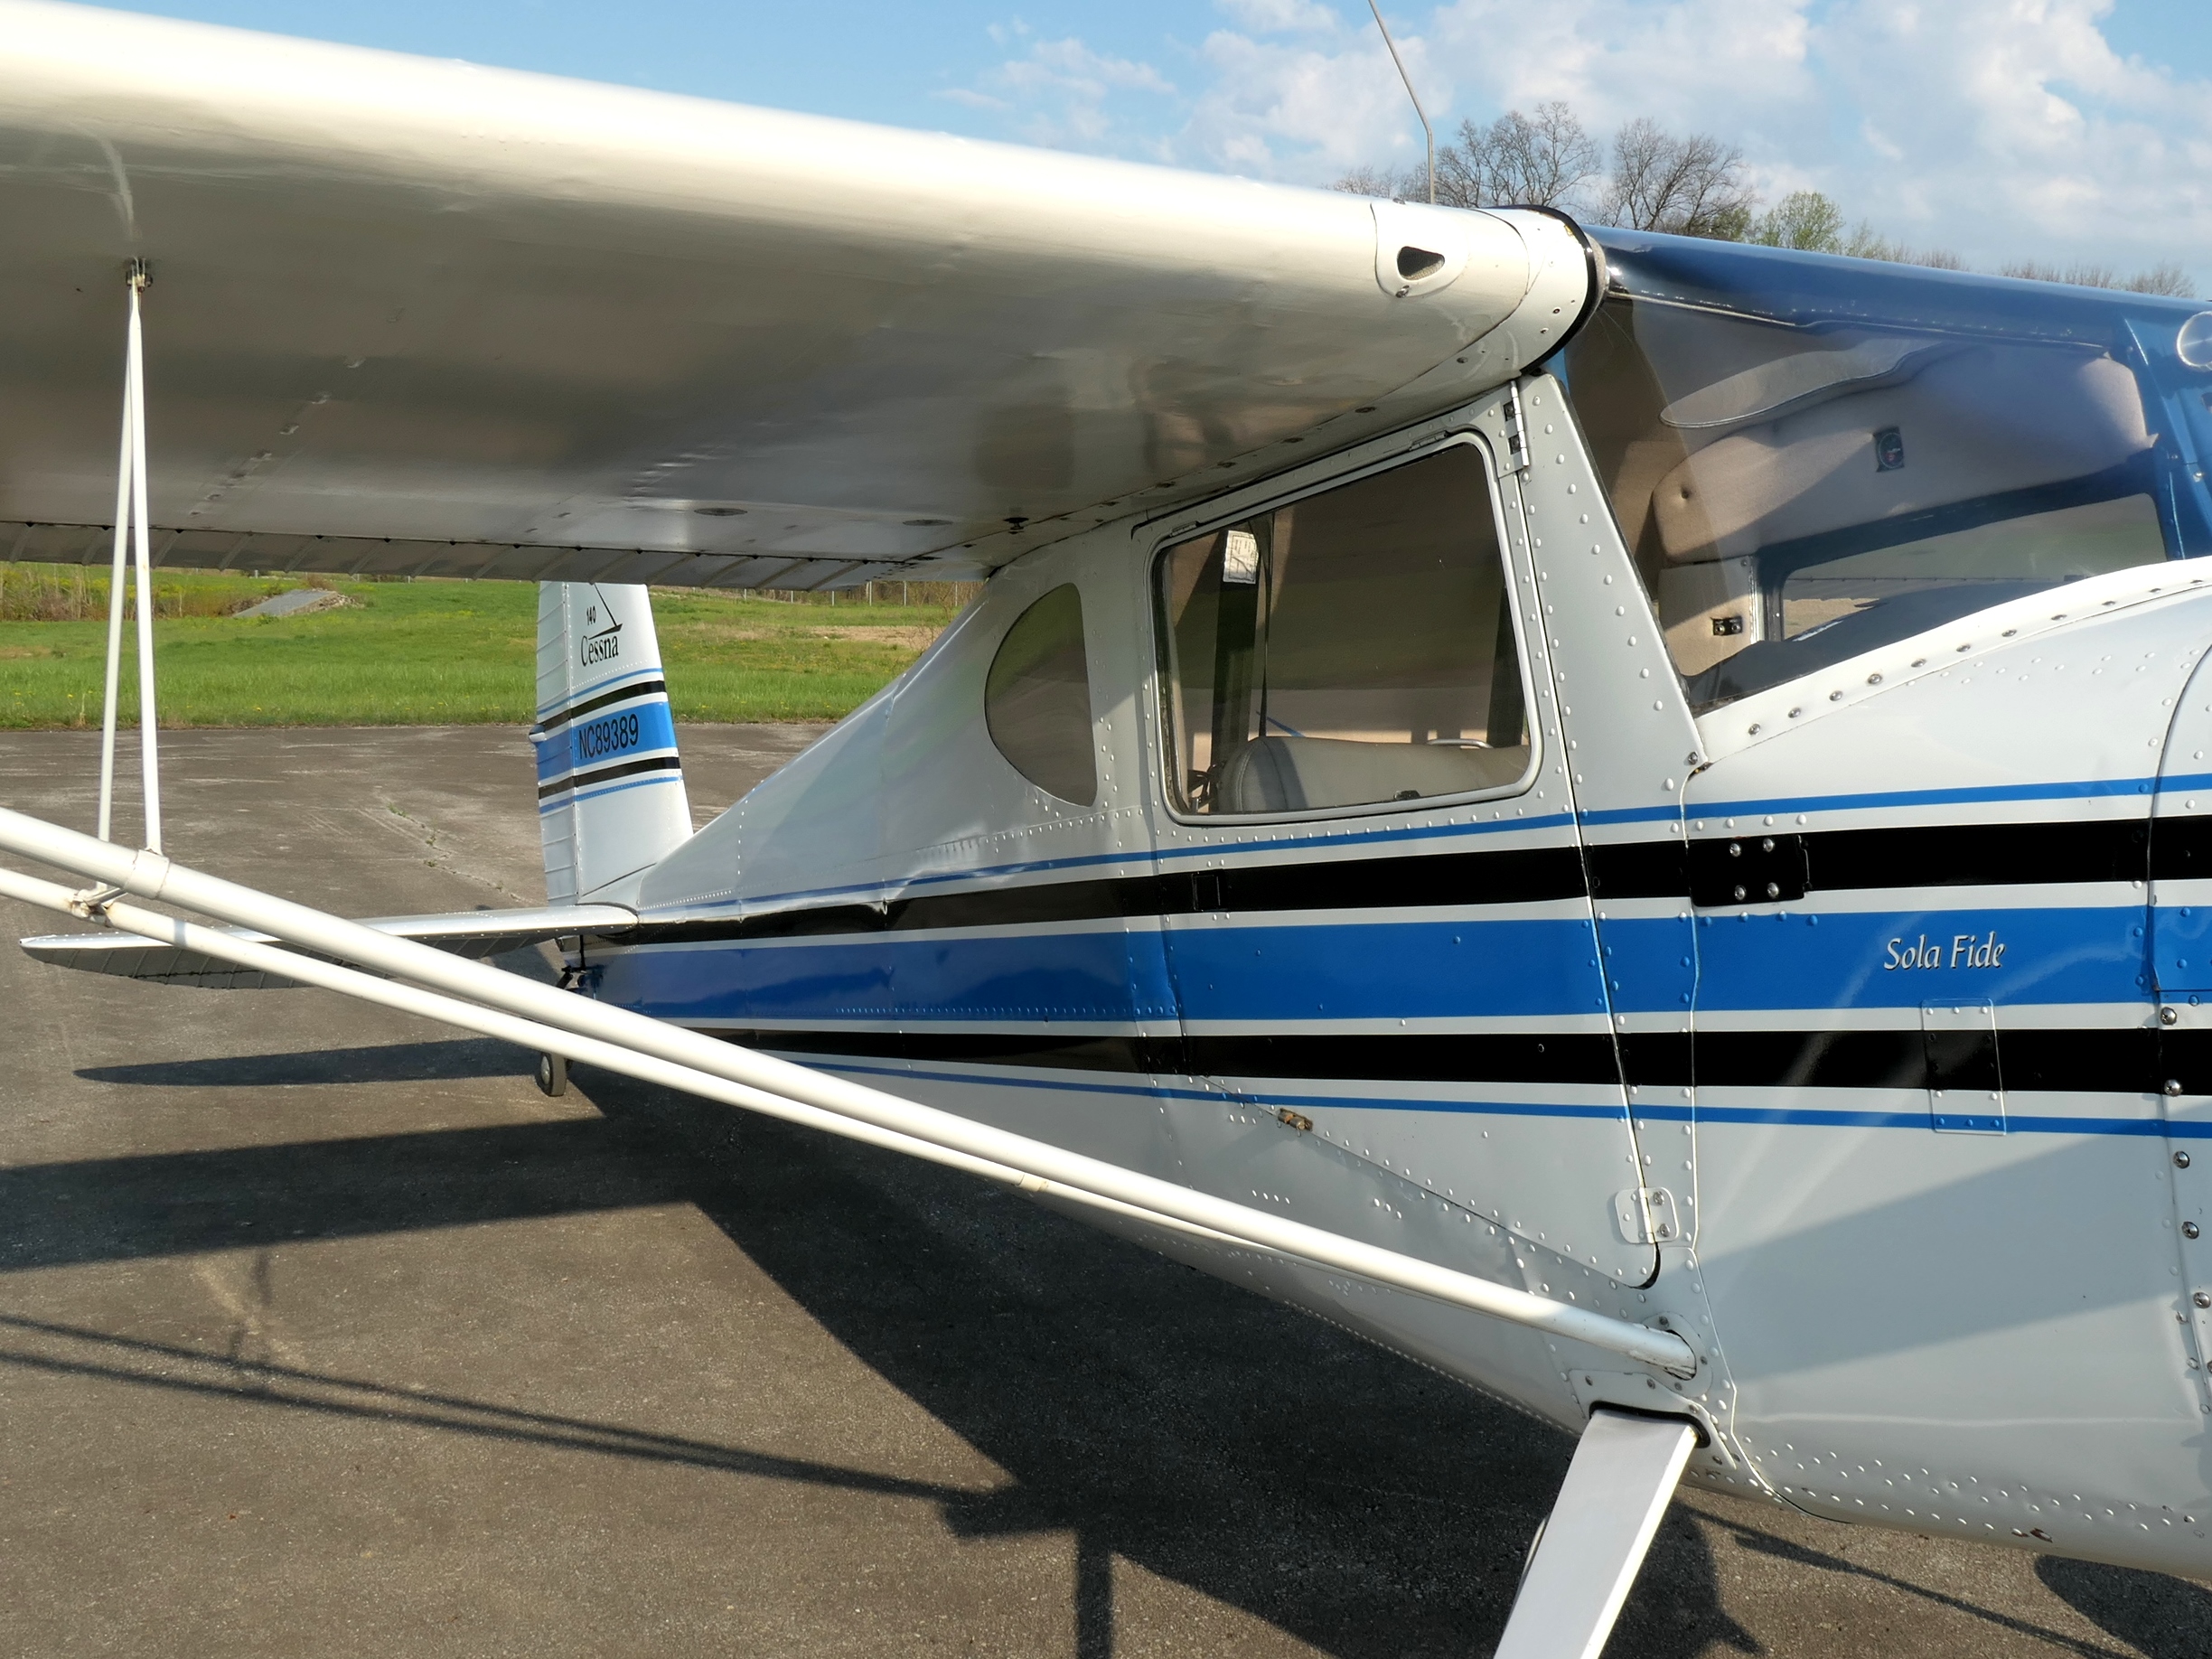 Cessna C140 - N89389